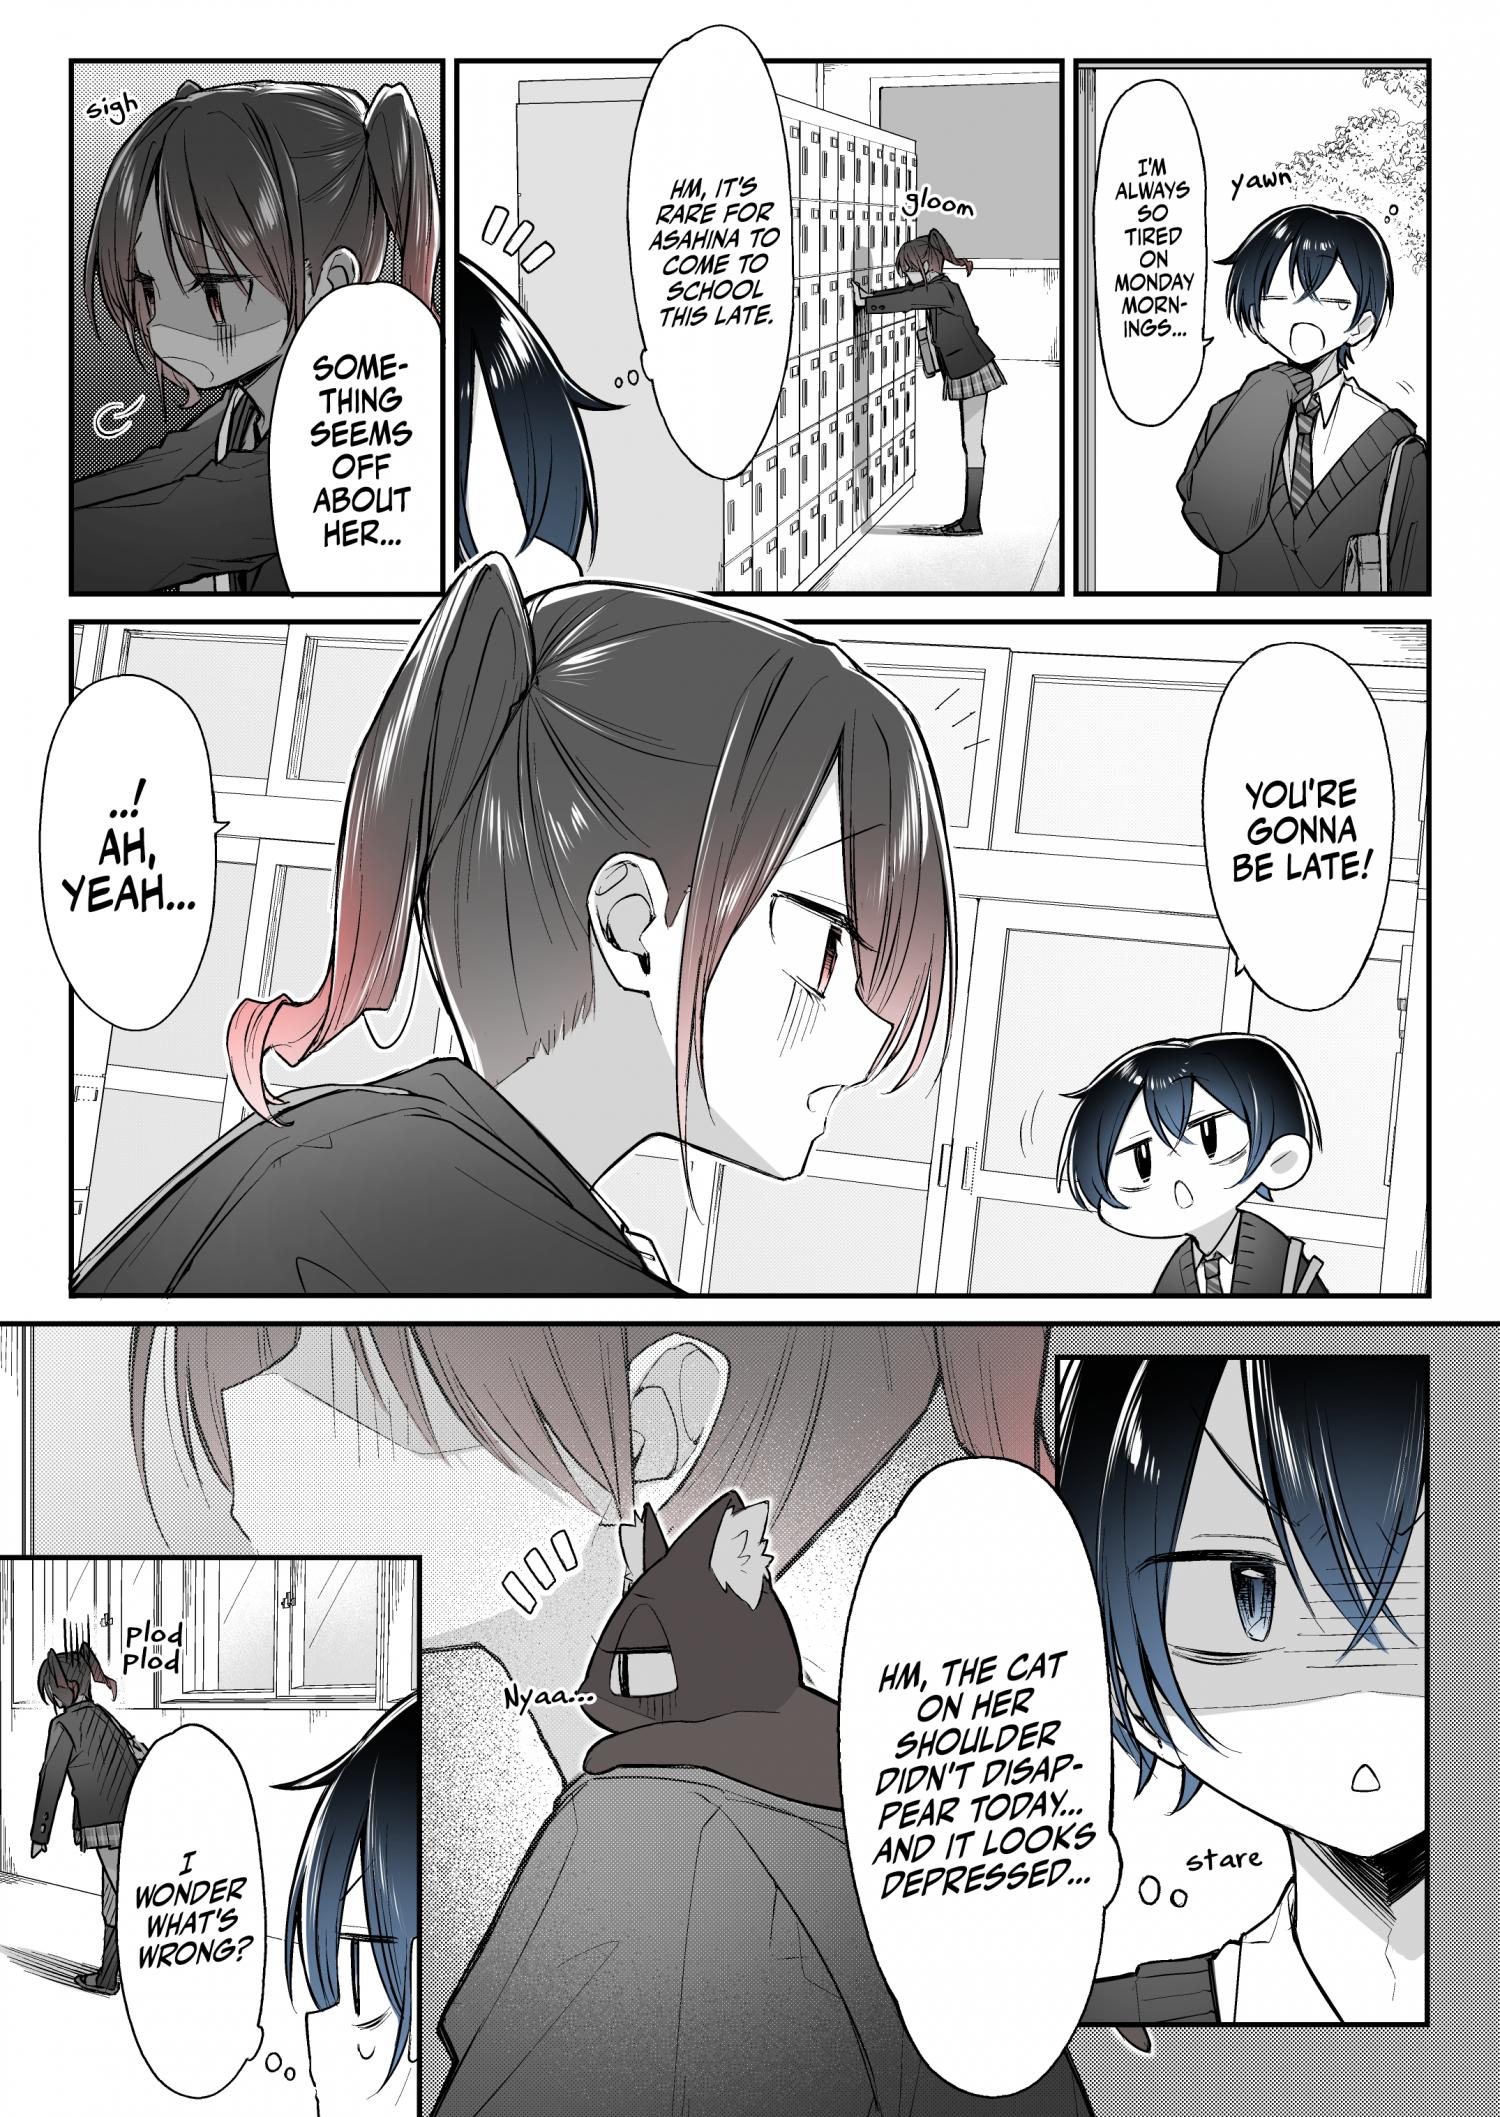 Blushing Because Of You (Serialization) Manga 